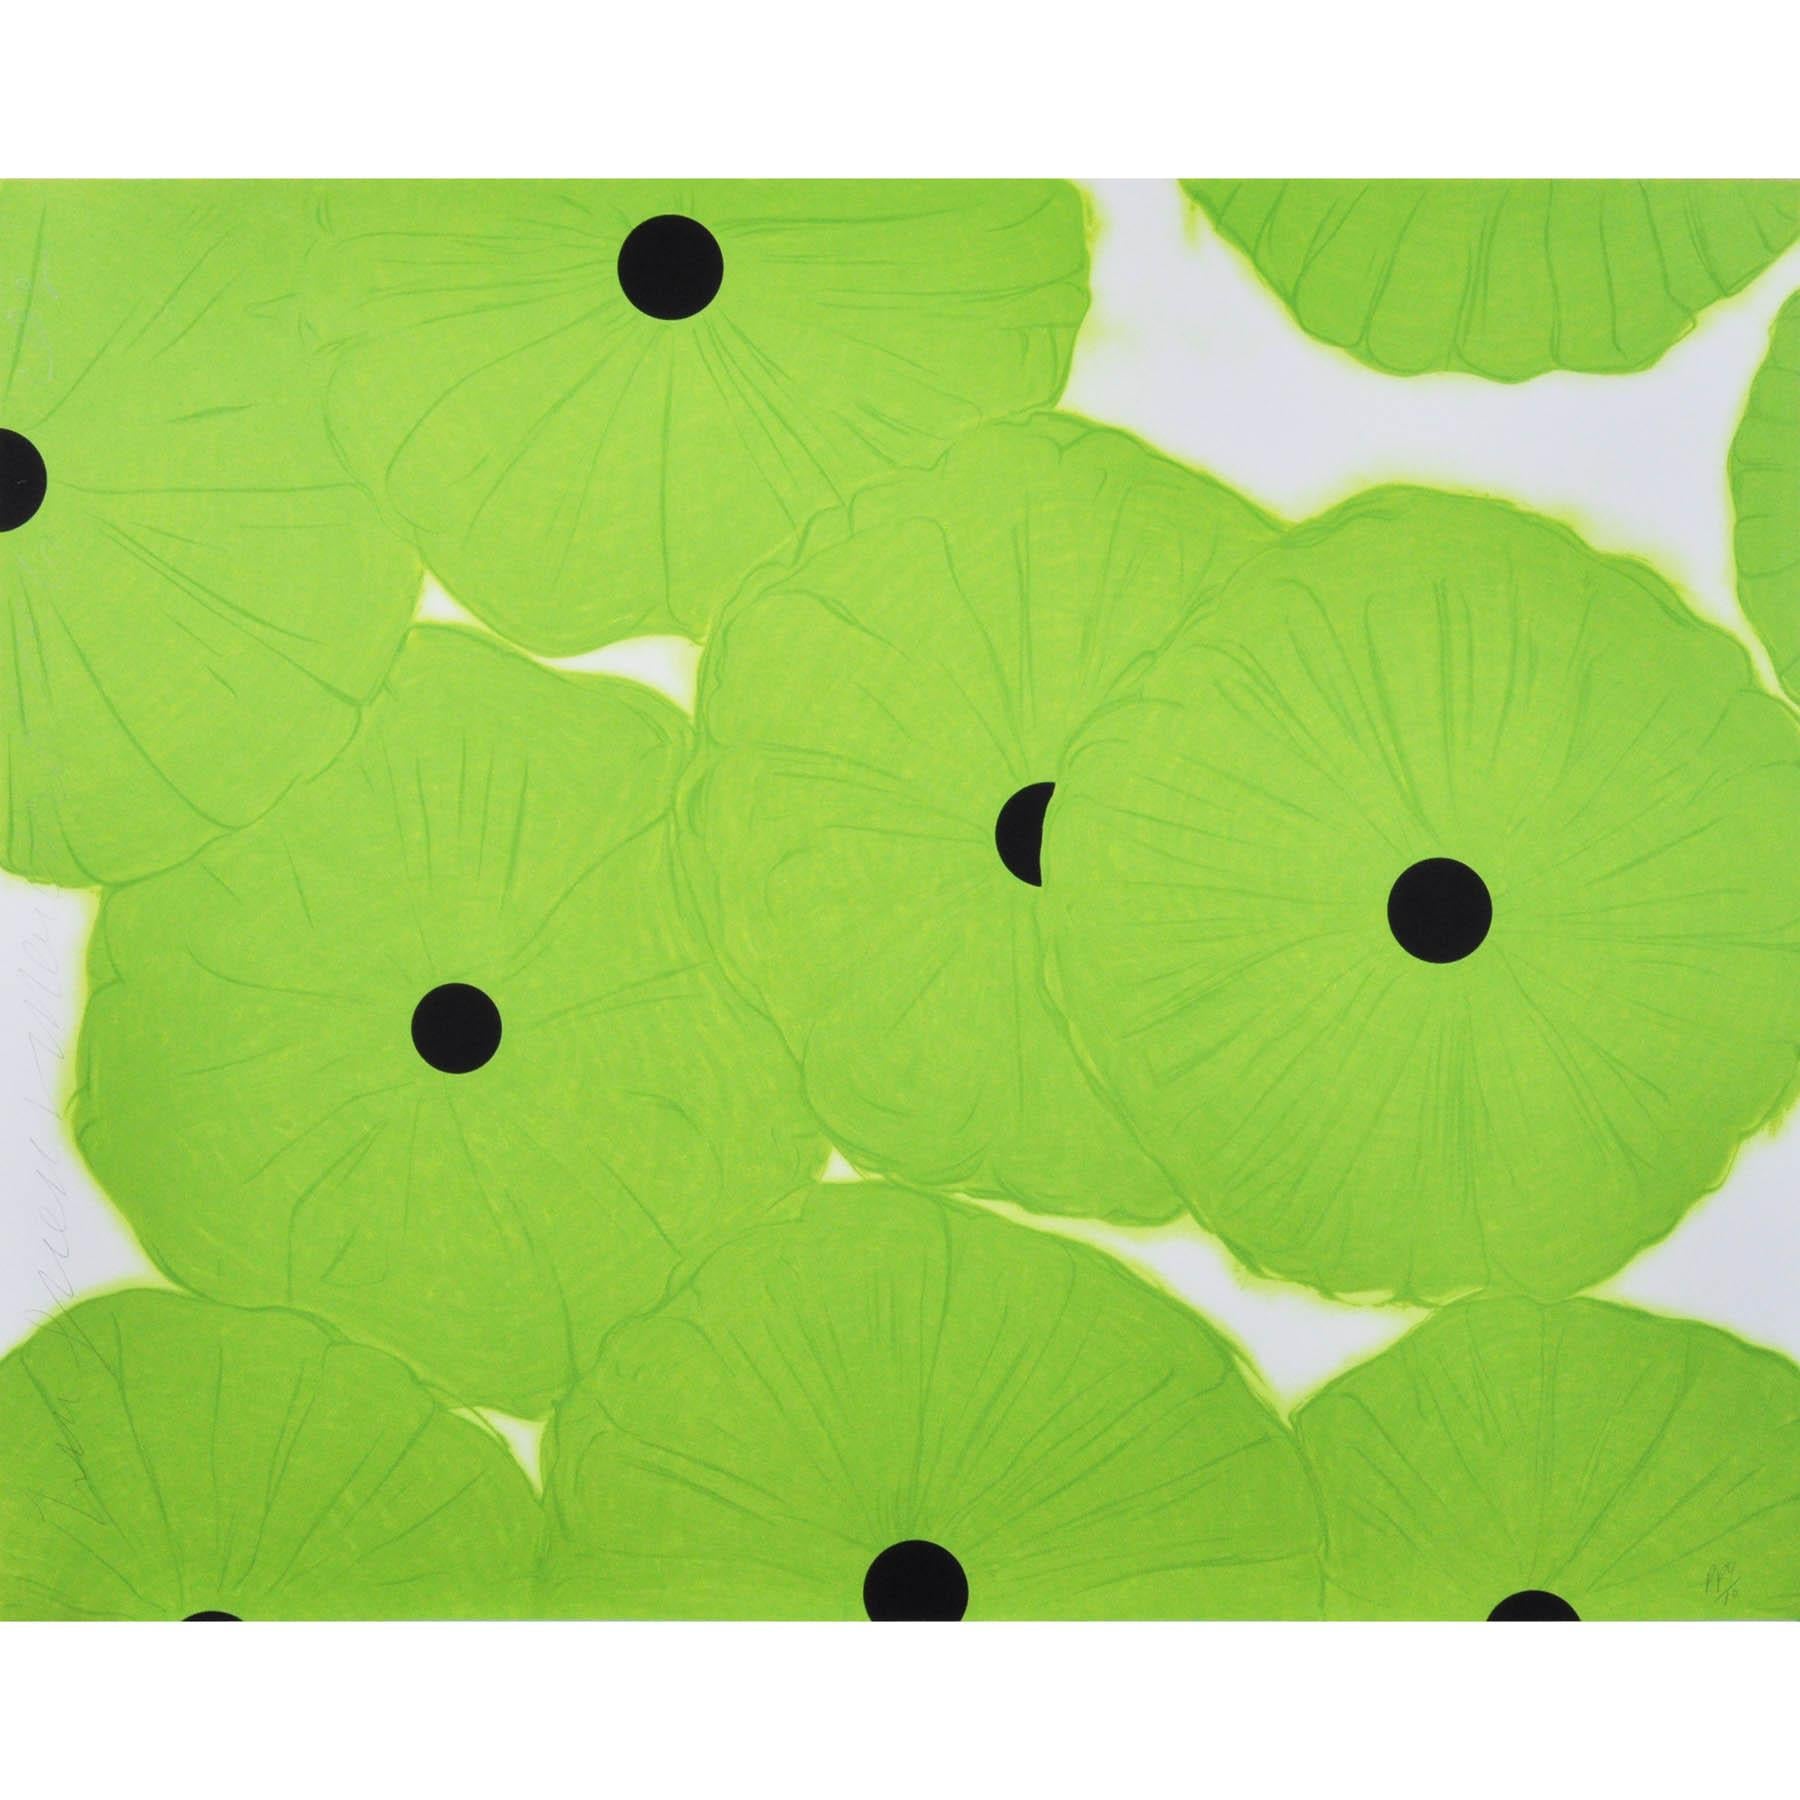 Donald Sultan Figurative Print - Ten Greens - Contemporary, 21st Century, Silkscreen, Limited Edition, Green